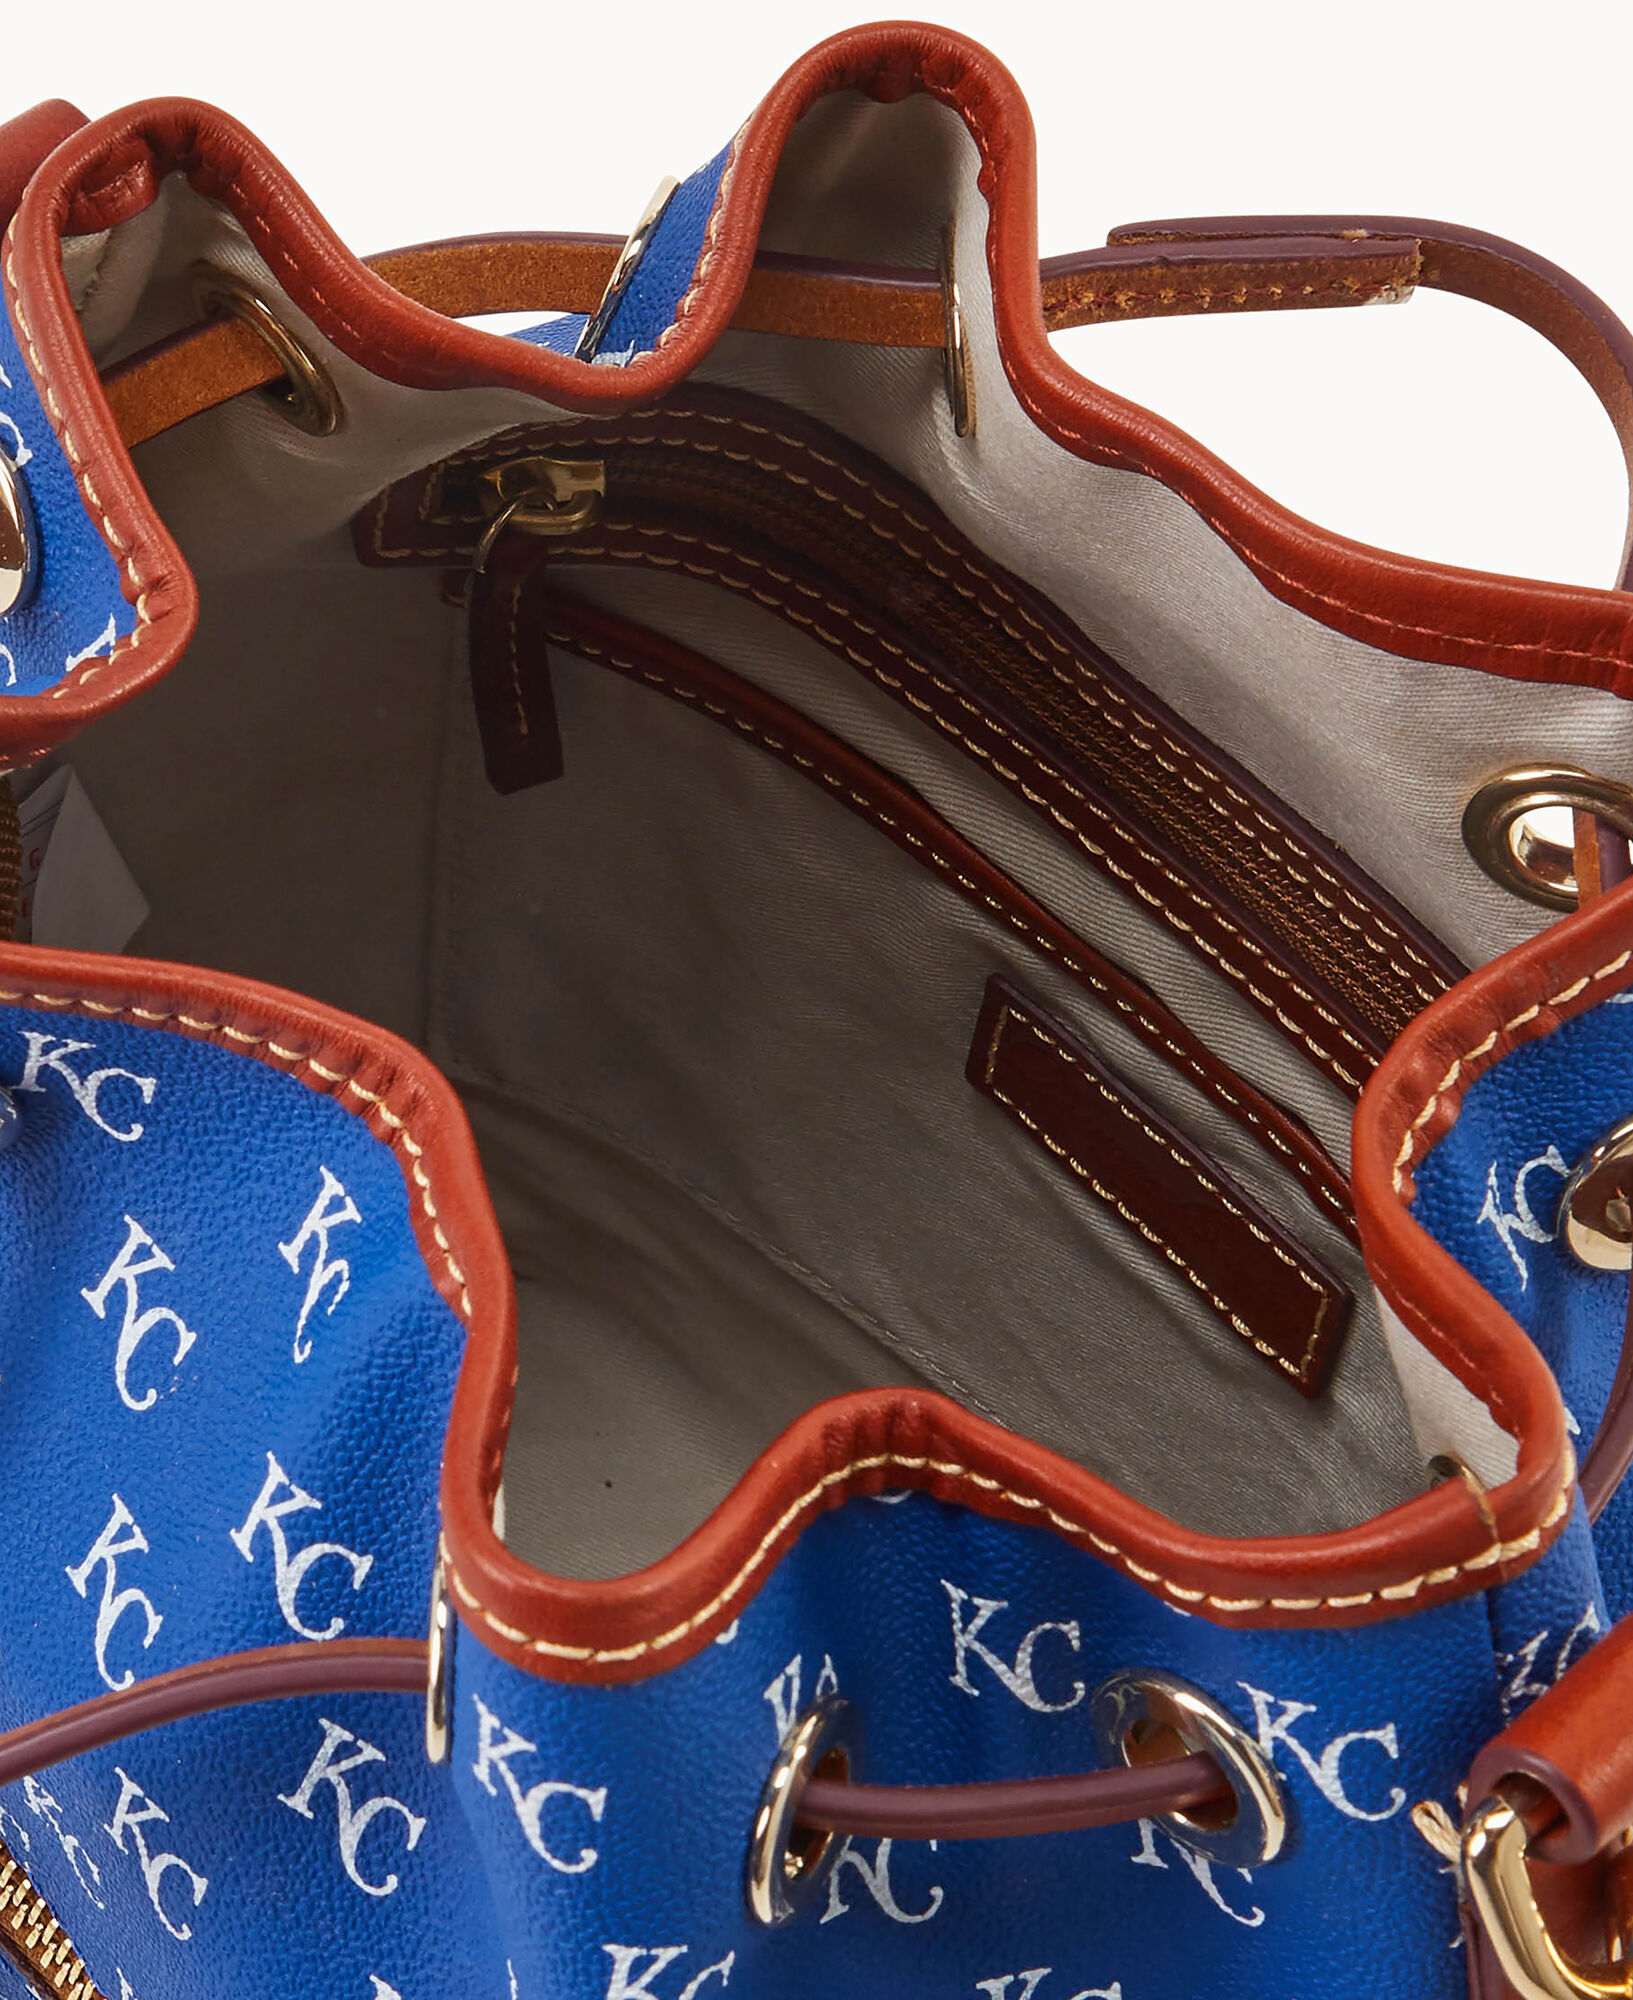 Dooney & Bourke Kansas City Royals Game Day Hobo Bag